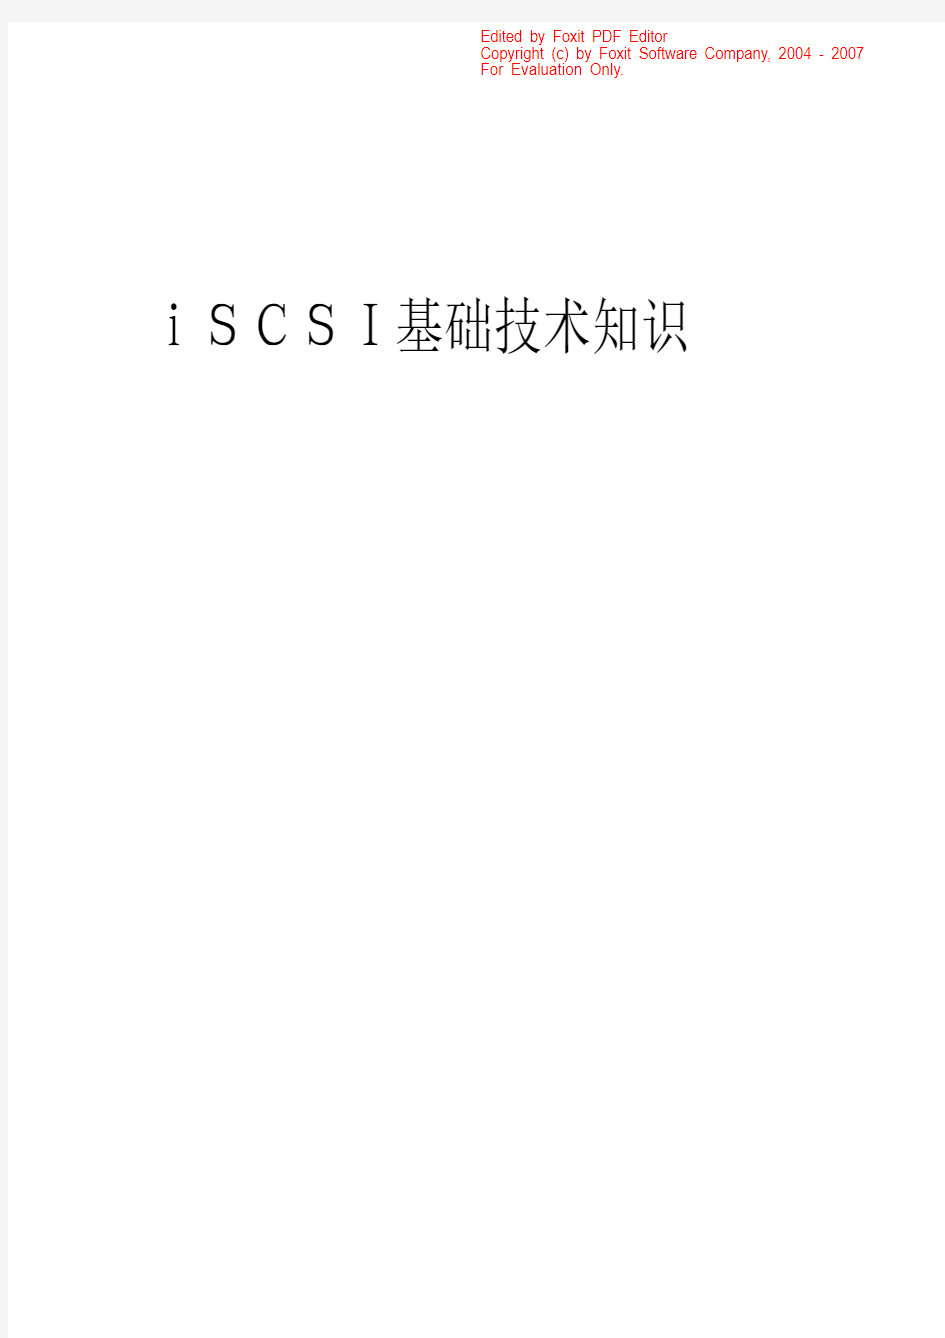 iSCSI技术基础知识汇总